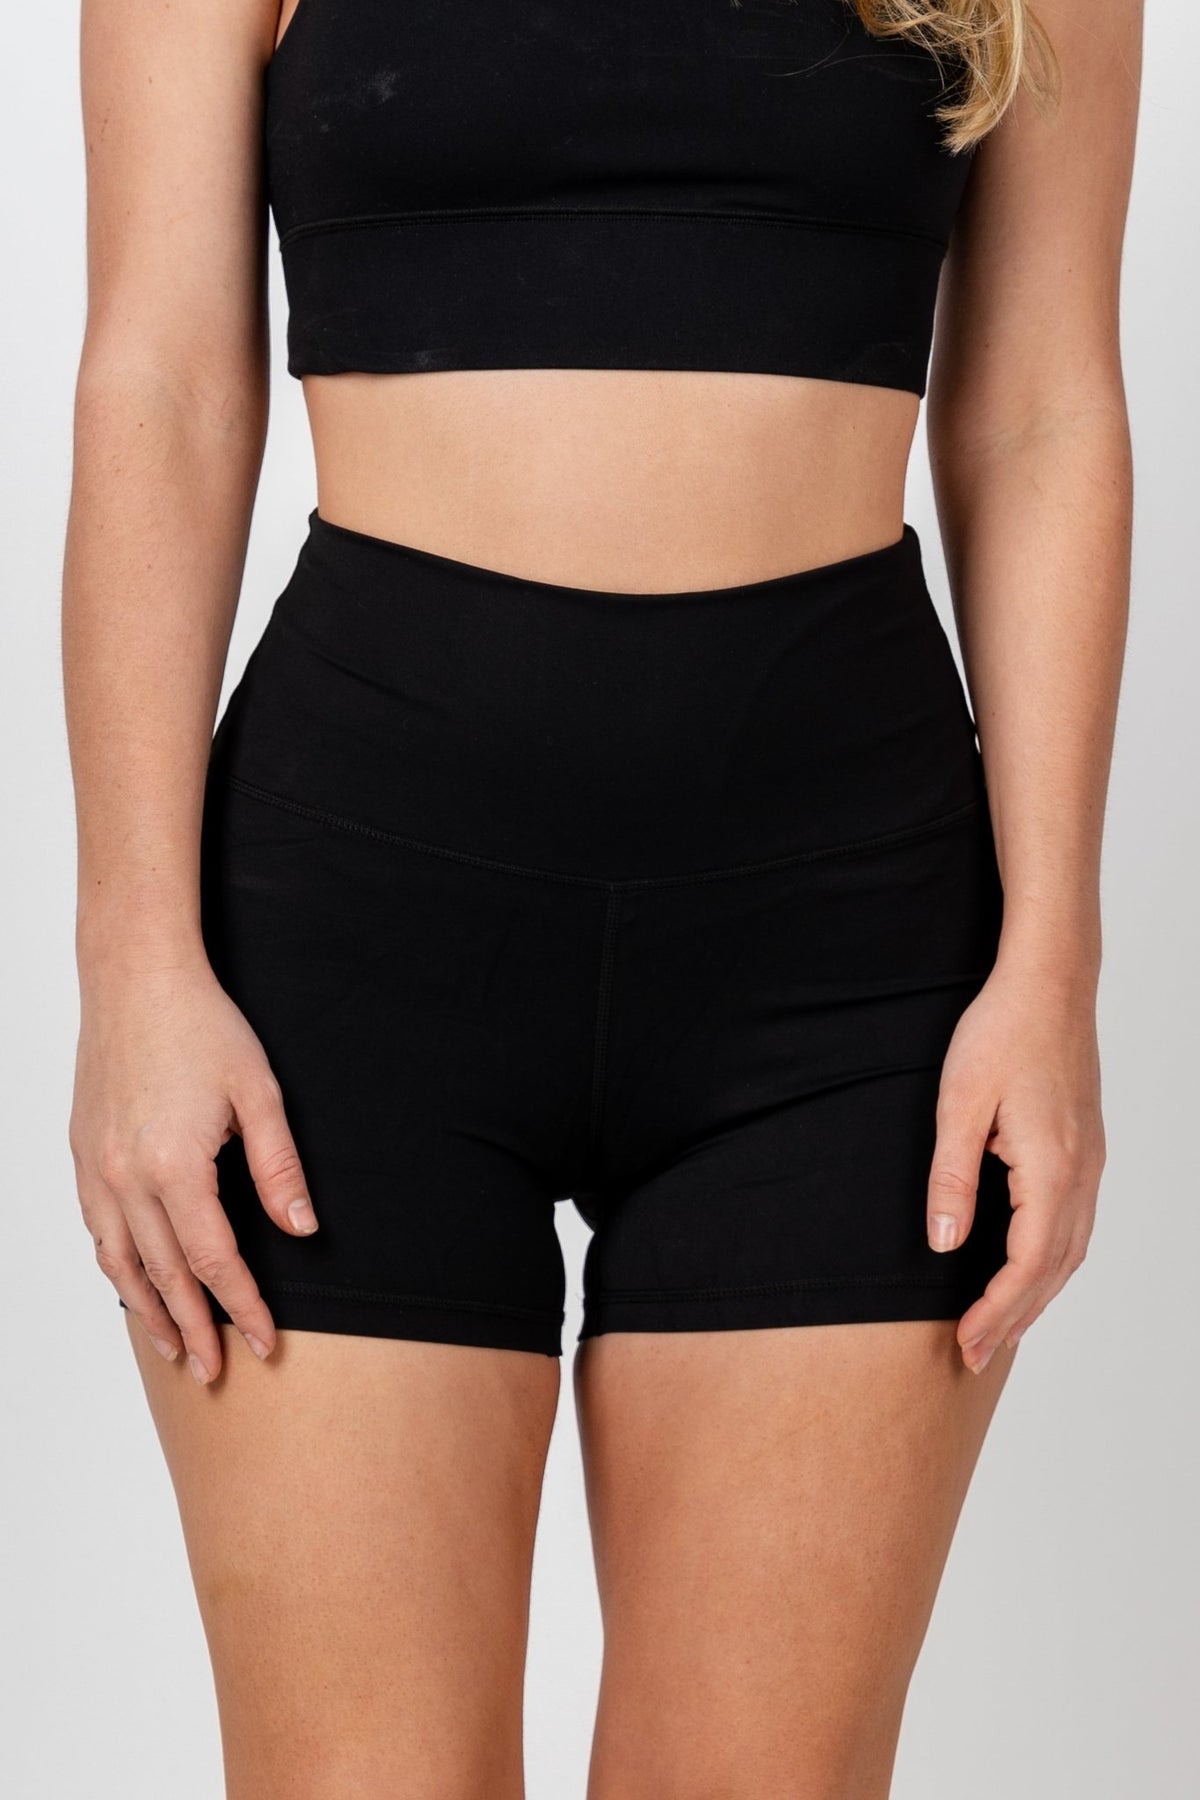 4 inch inseam biker shorts black - Cute biker shorts - Trendy Shorts at Lush Fashion Lounge Boutique in Oklahoma City